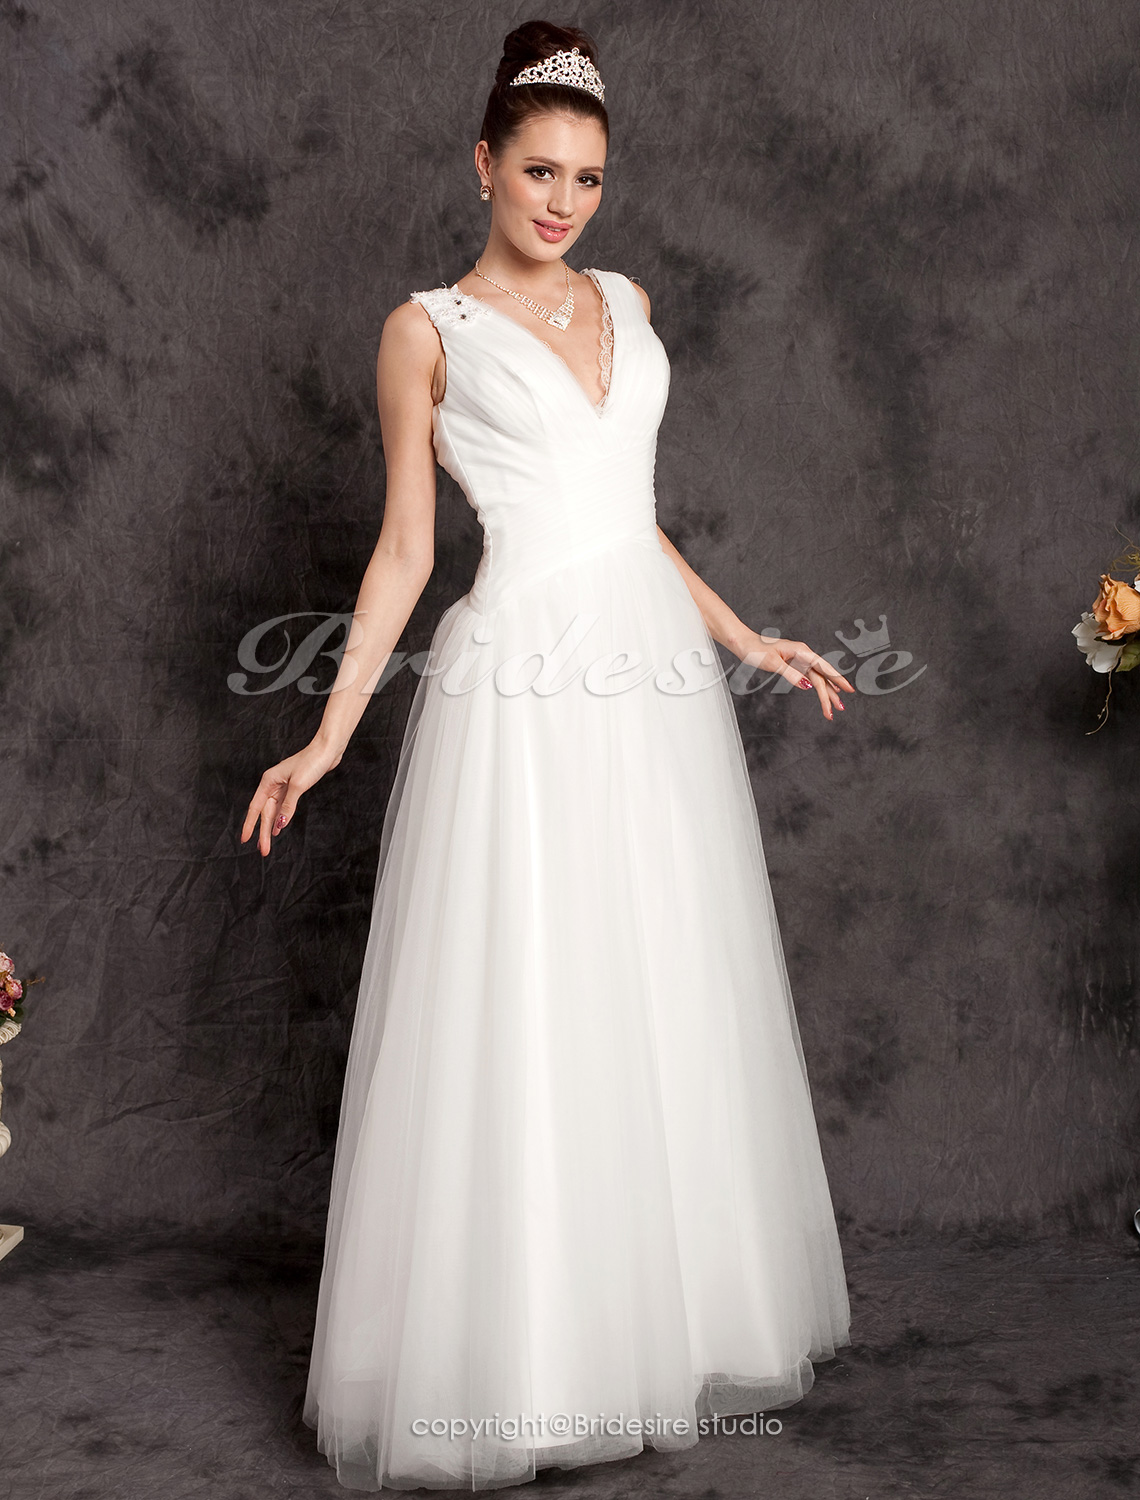 A-line Floor-length Tulle V-neck Wedding Dress